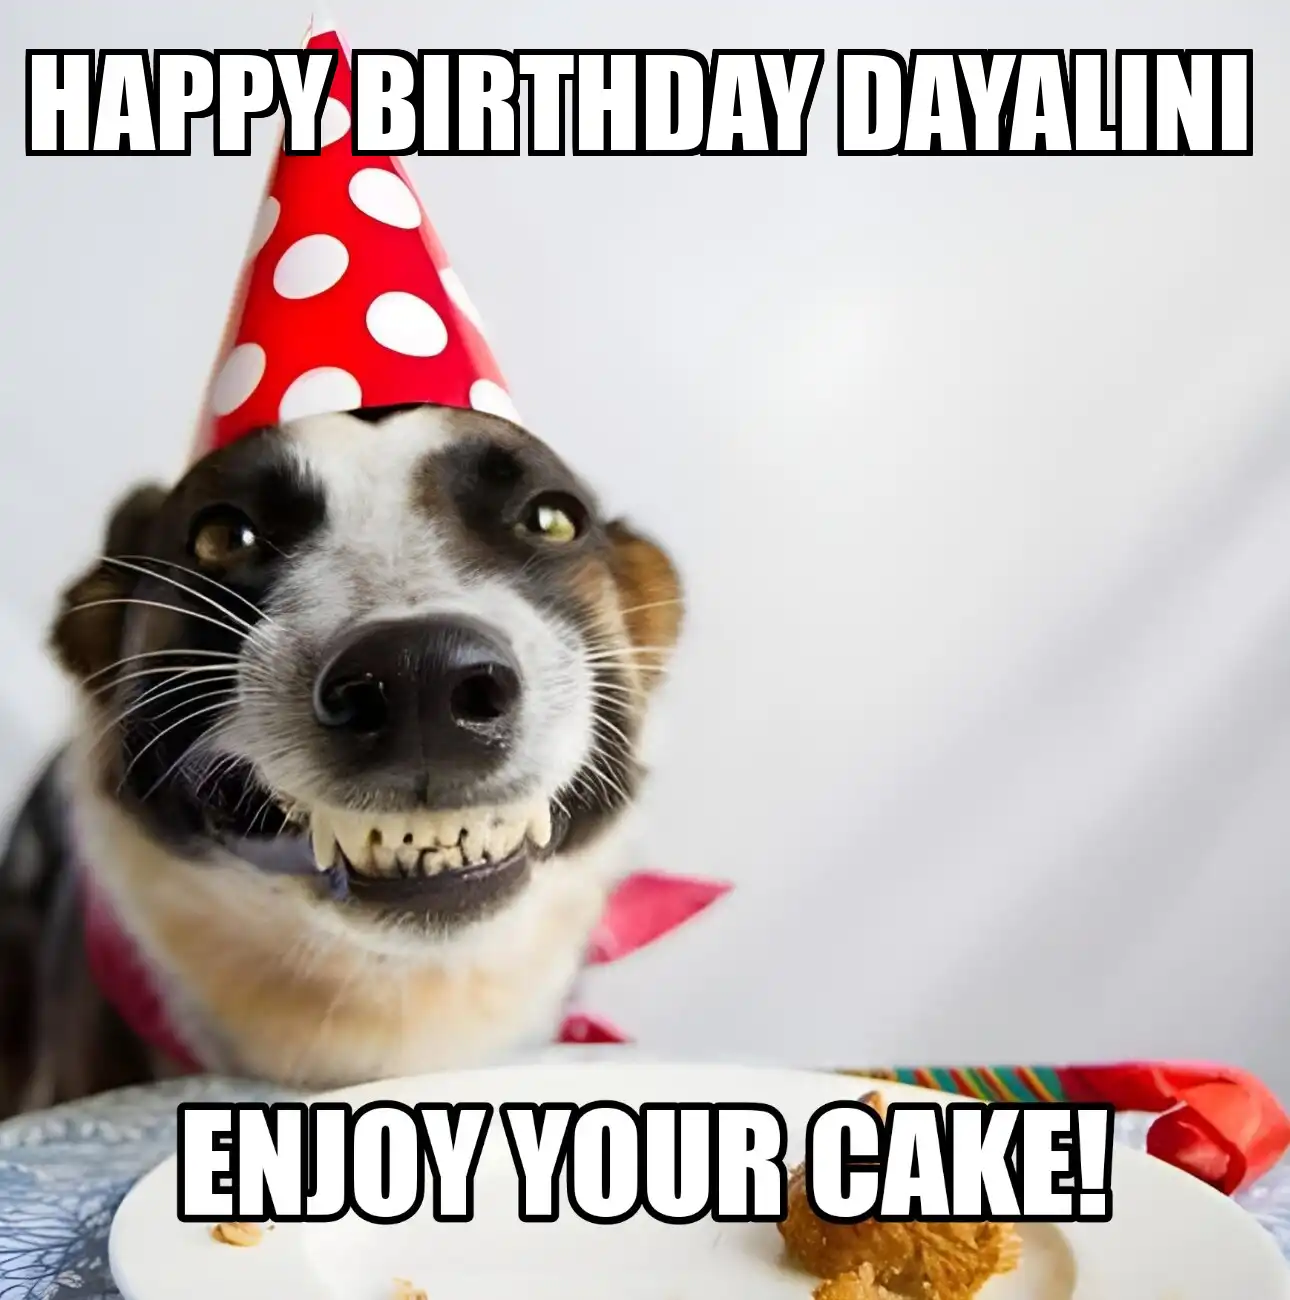 Happy Birthday Dayalini Enjoy Your Cake Dog Meme